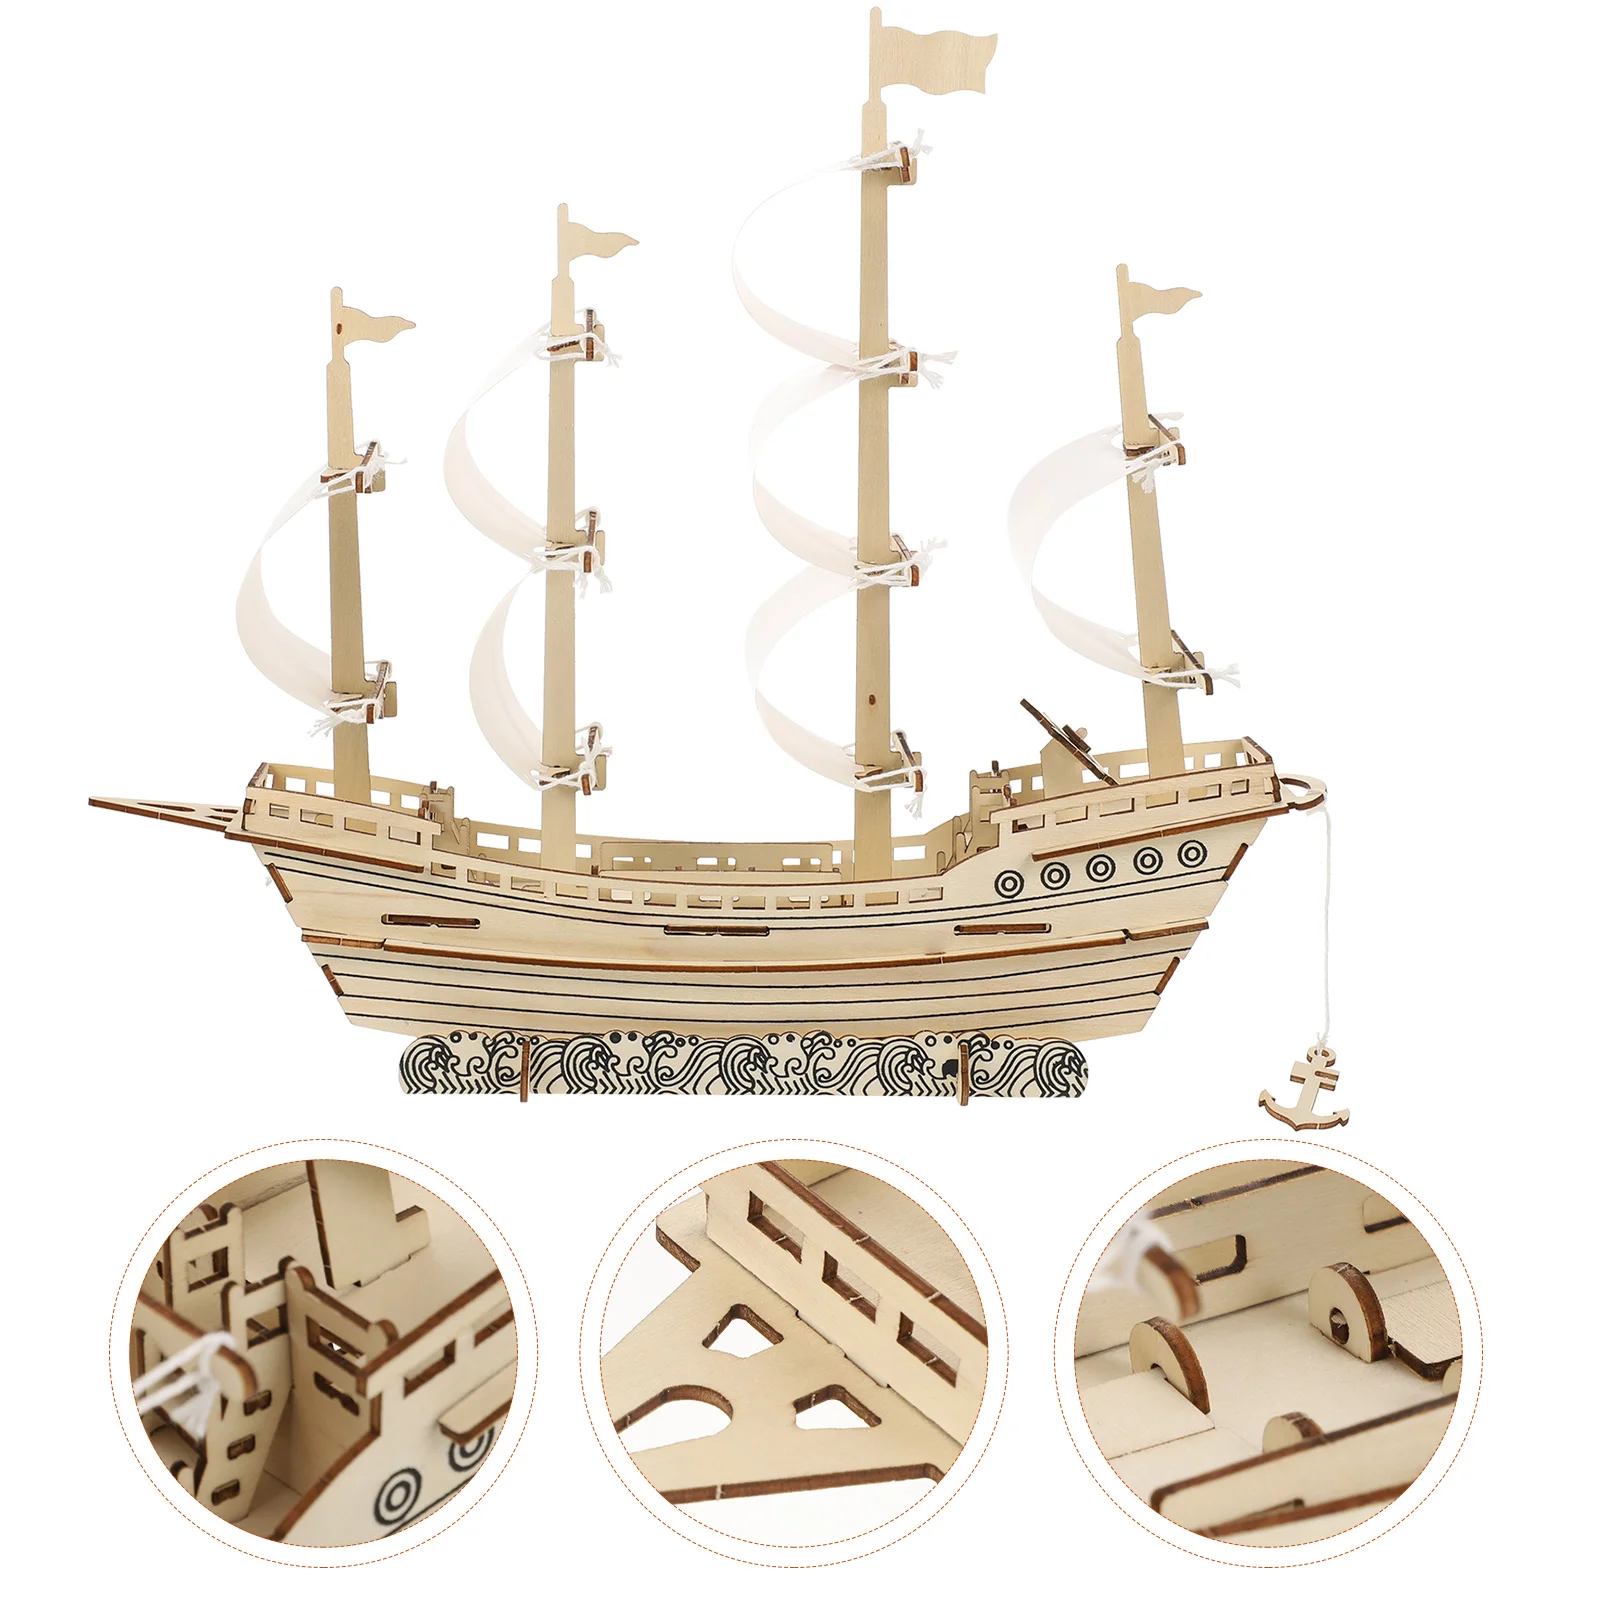 

3D Wooden Ship Jigsaw Toys DIY Sailboat Model Puzzles Assemble Toys Building Kits Sailing Ship Educational Toys For Children